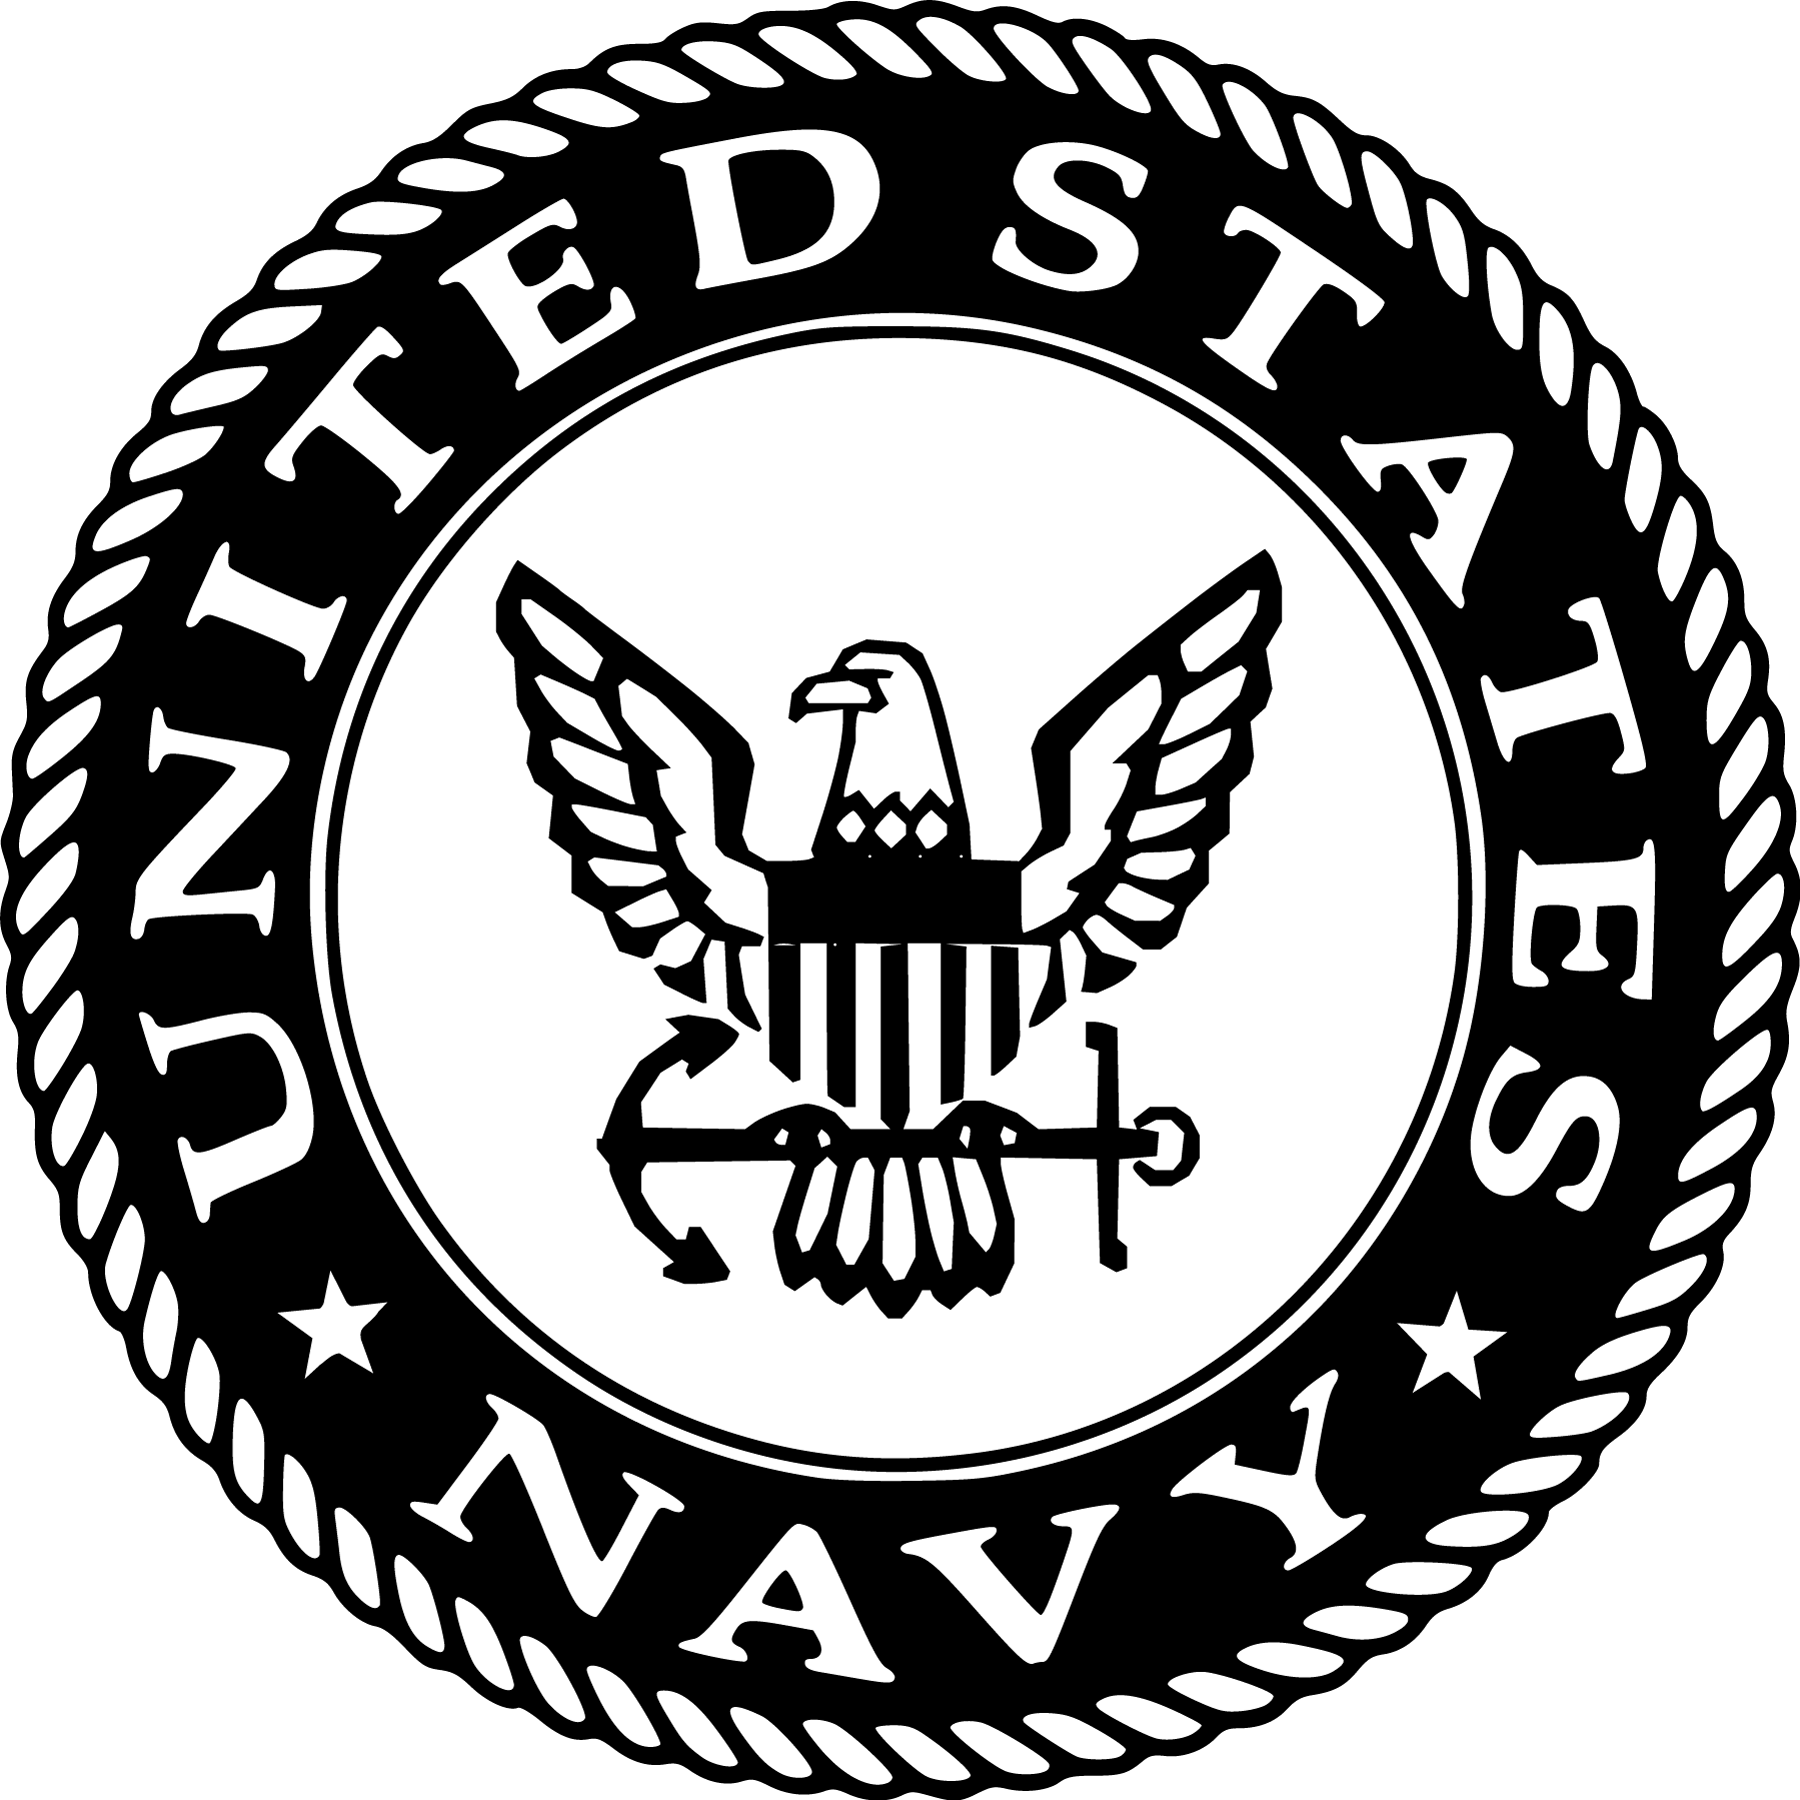 232 166 Art 538 Us Navy Milit